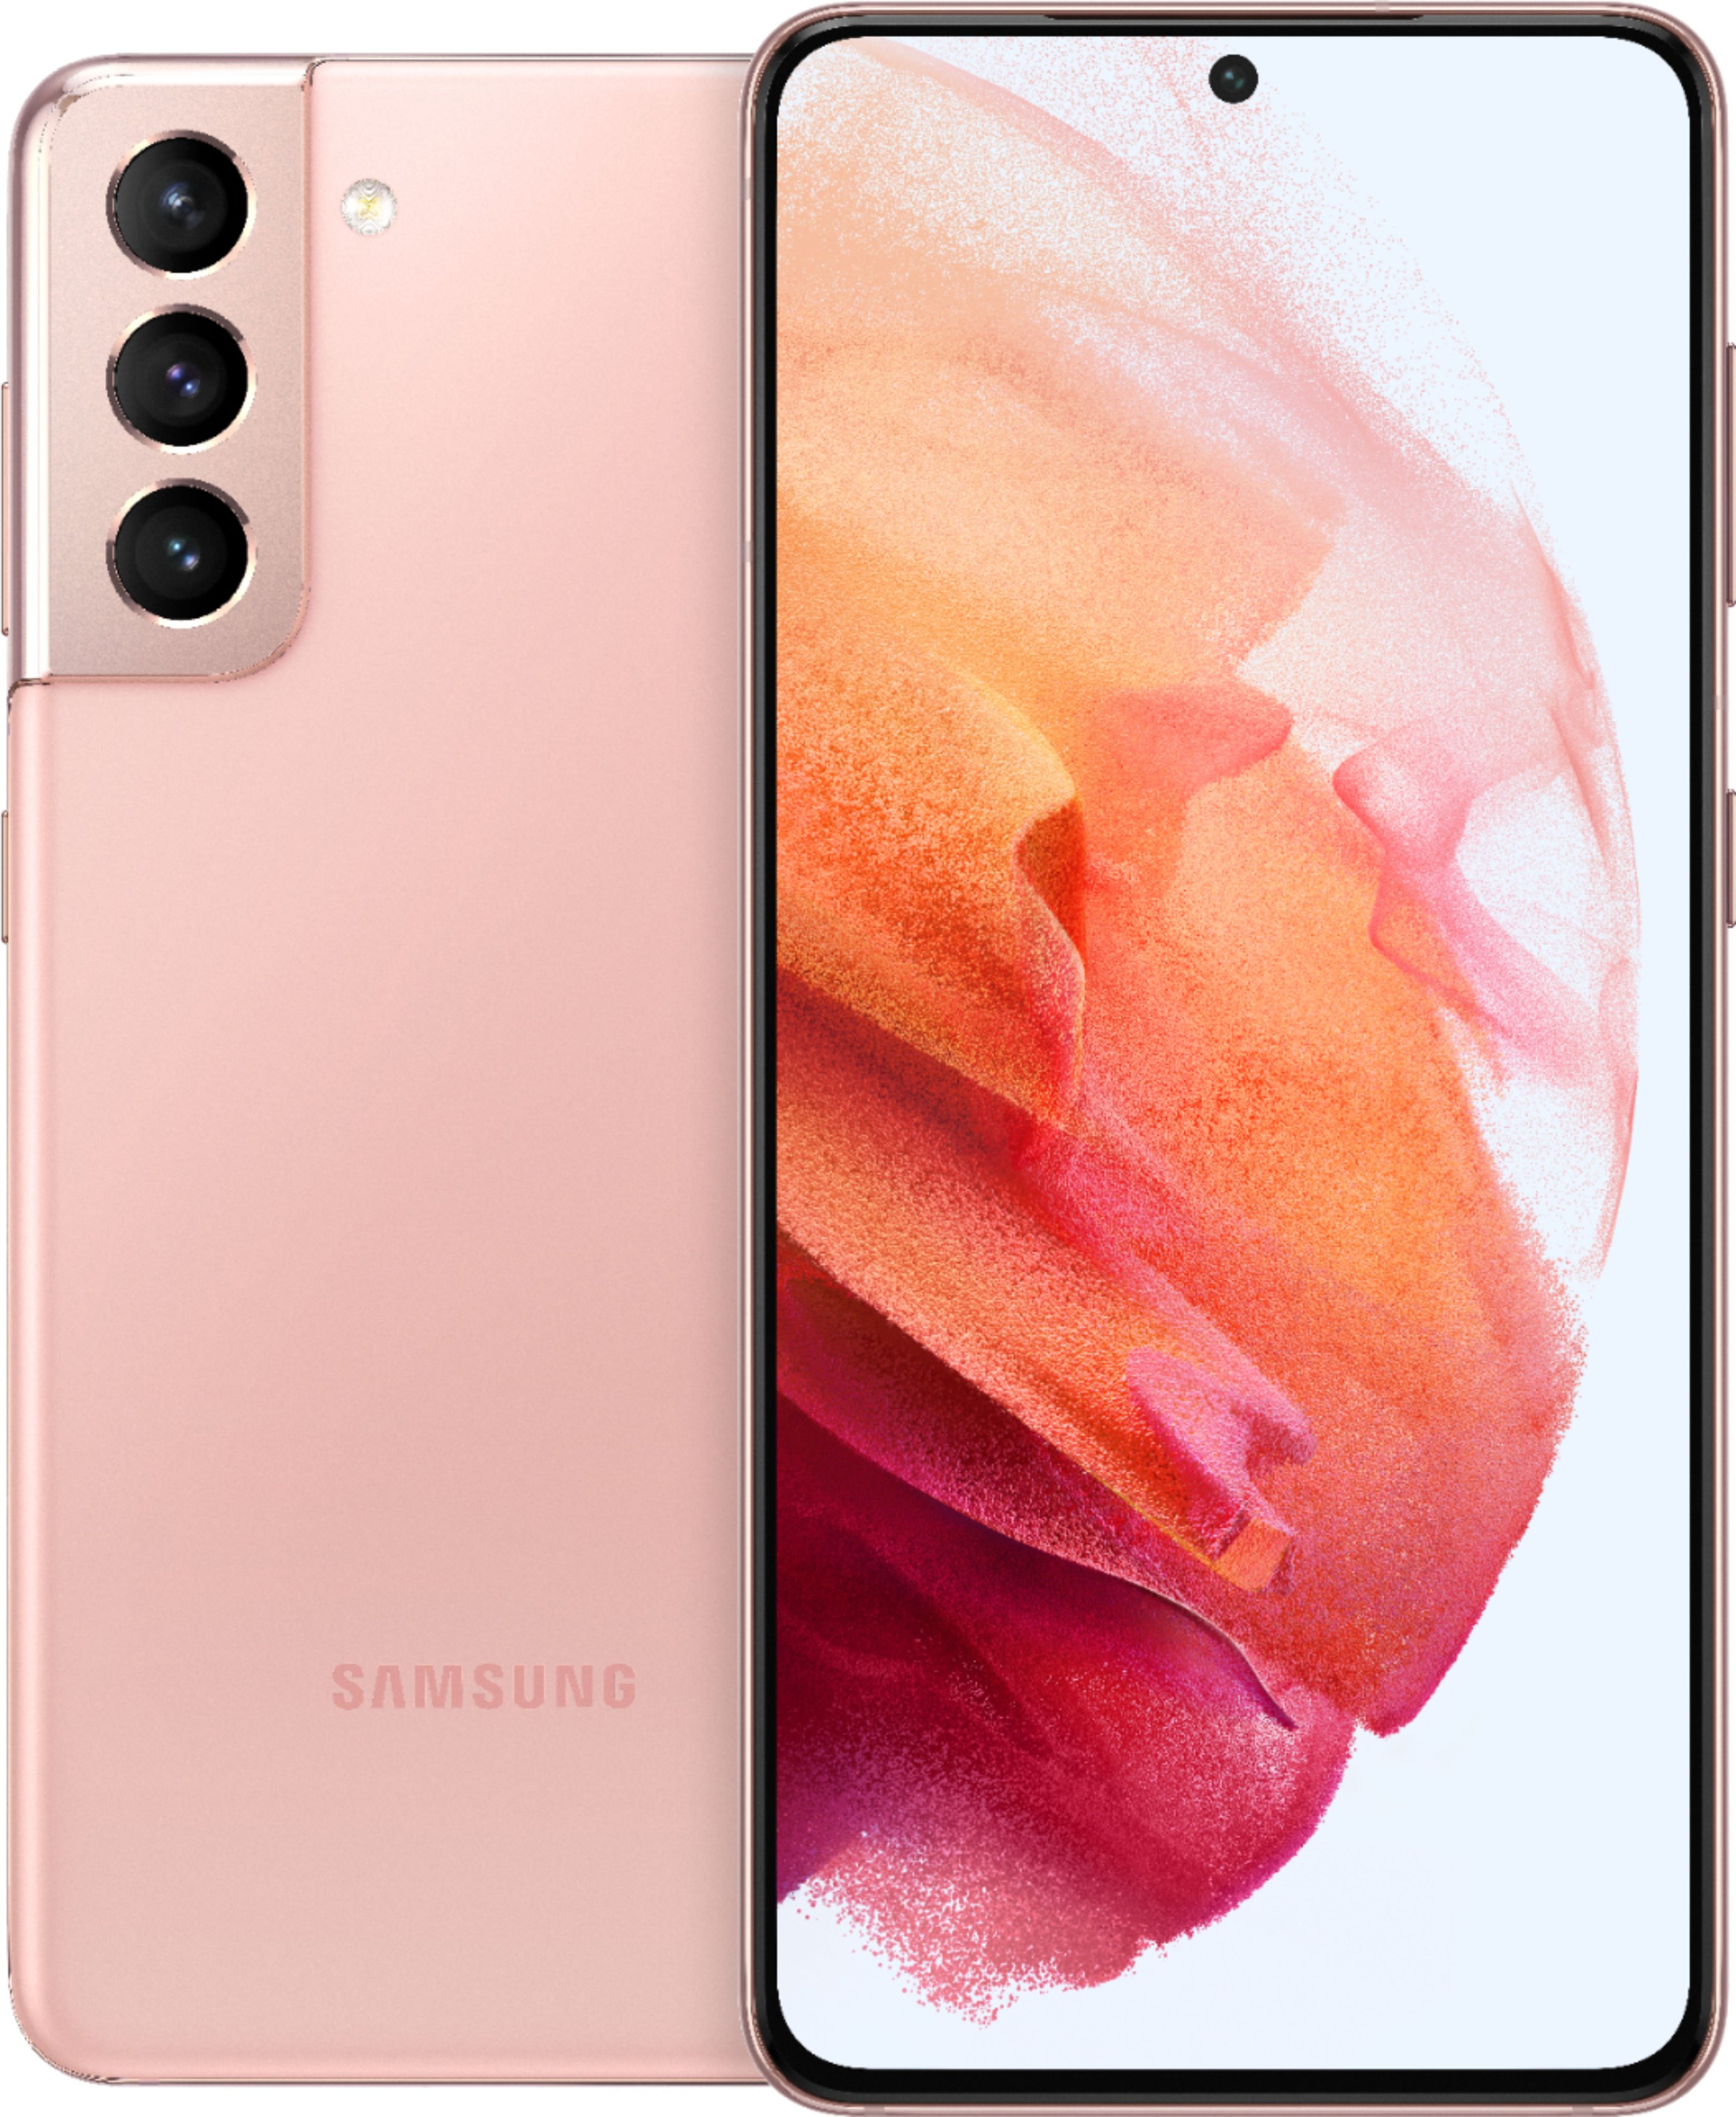 Samsung Galaxy S21 5g 128gb Phantom Pink Verizon Sm G991uziavzw Best Buy